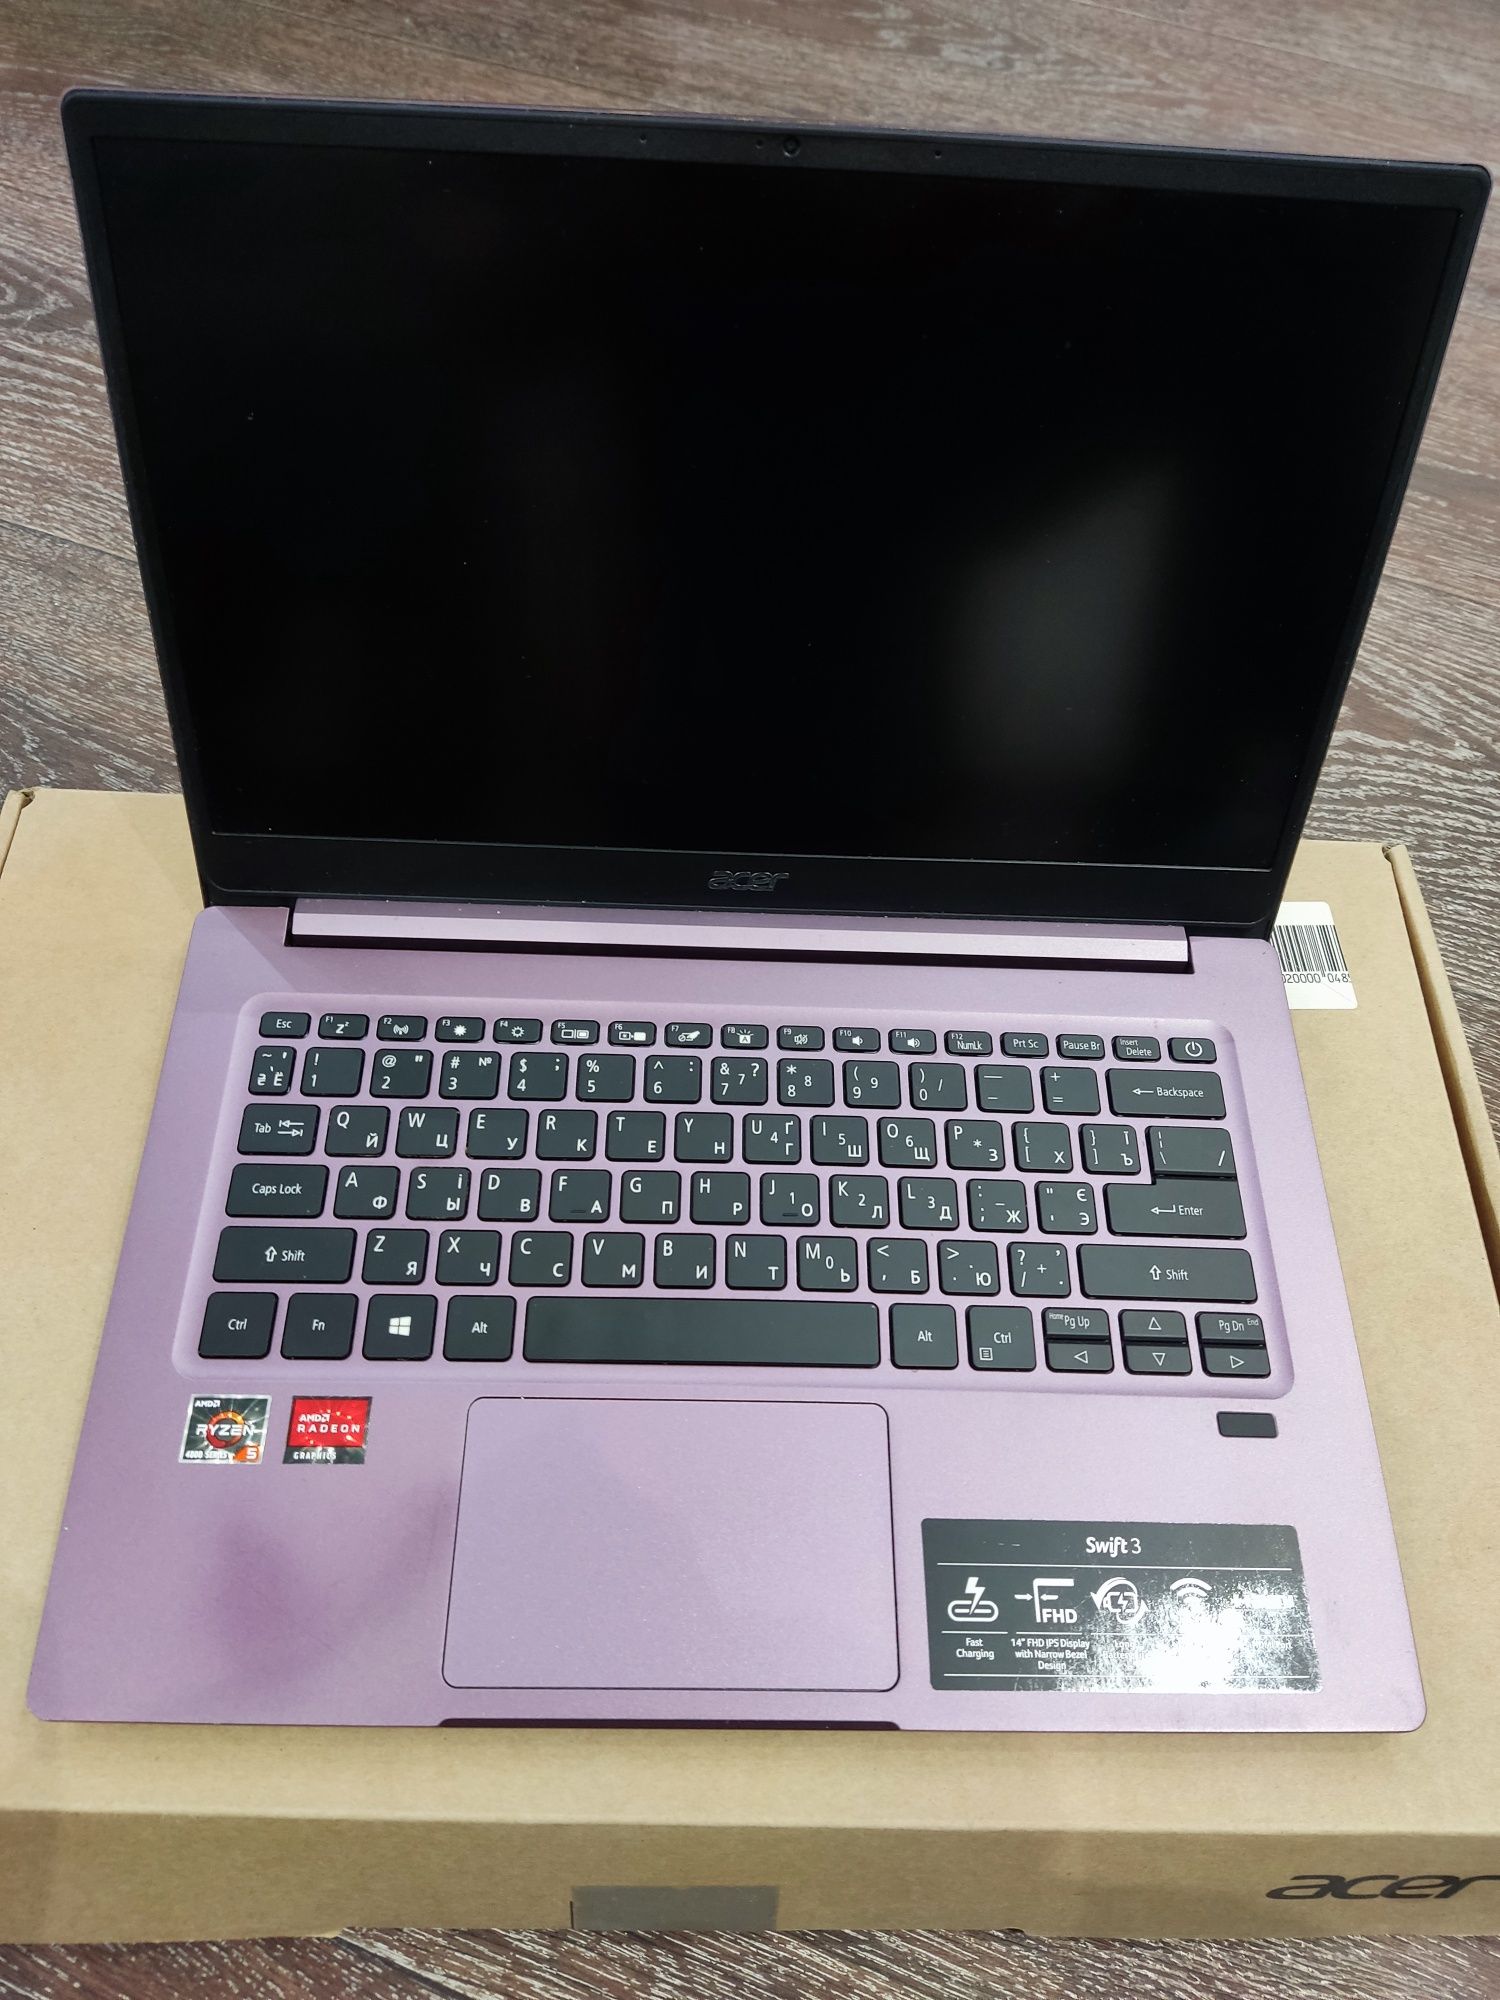 Ультрабук Acer swift 3 purple sf 314-42-r8pe